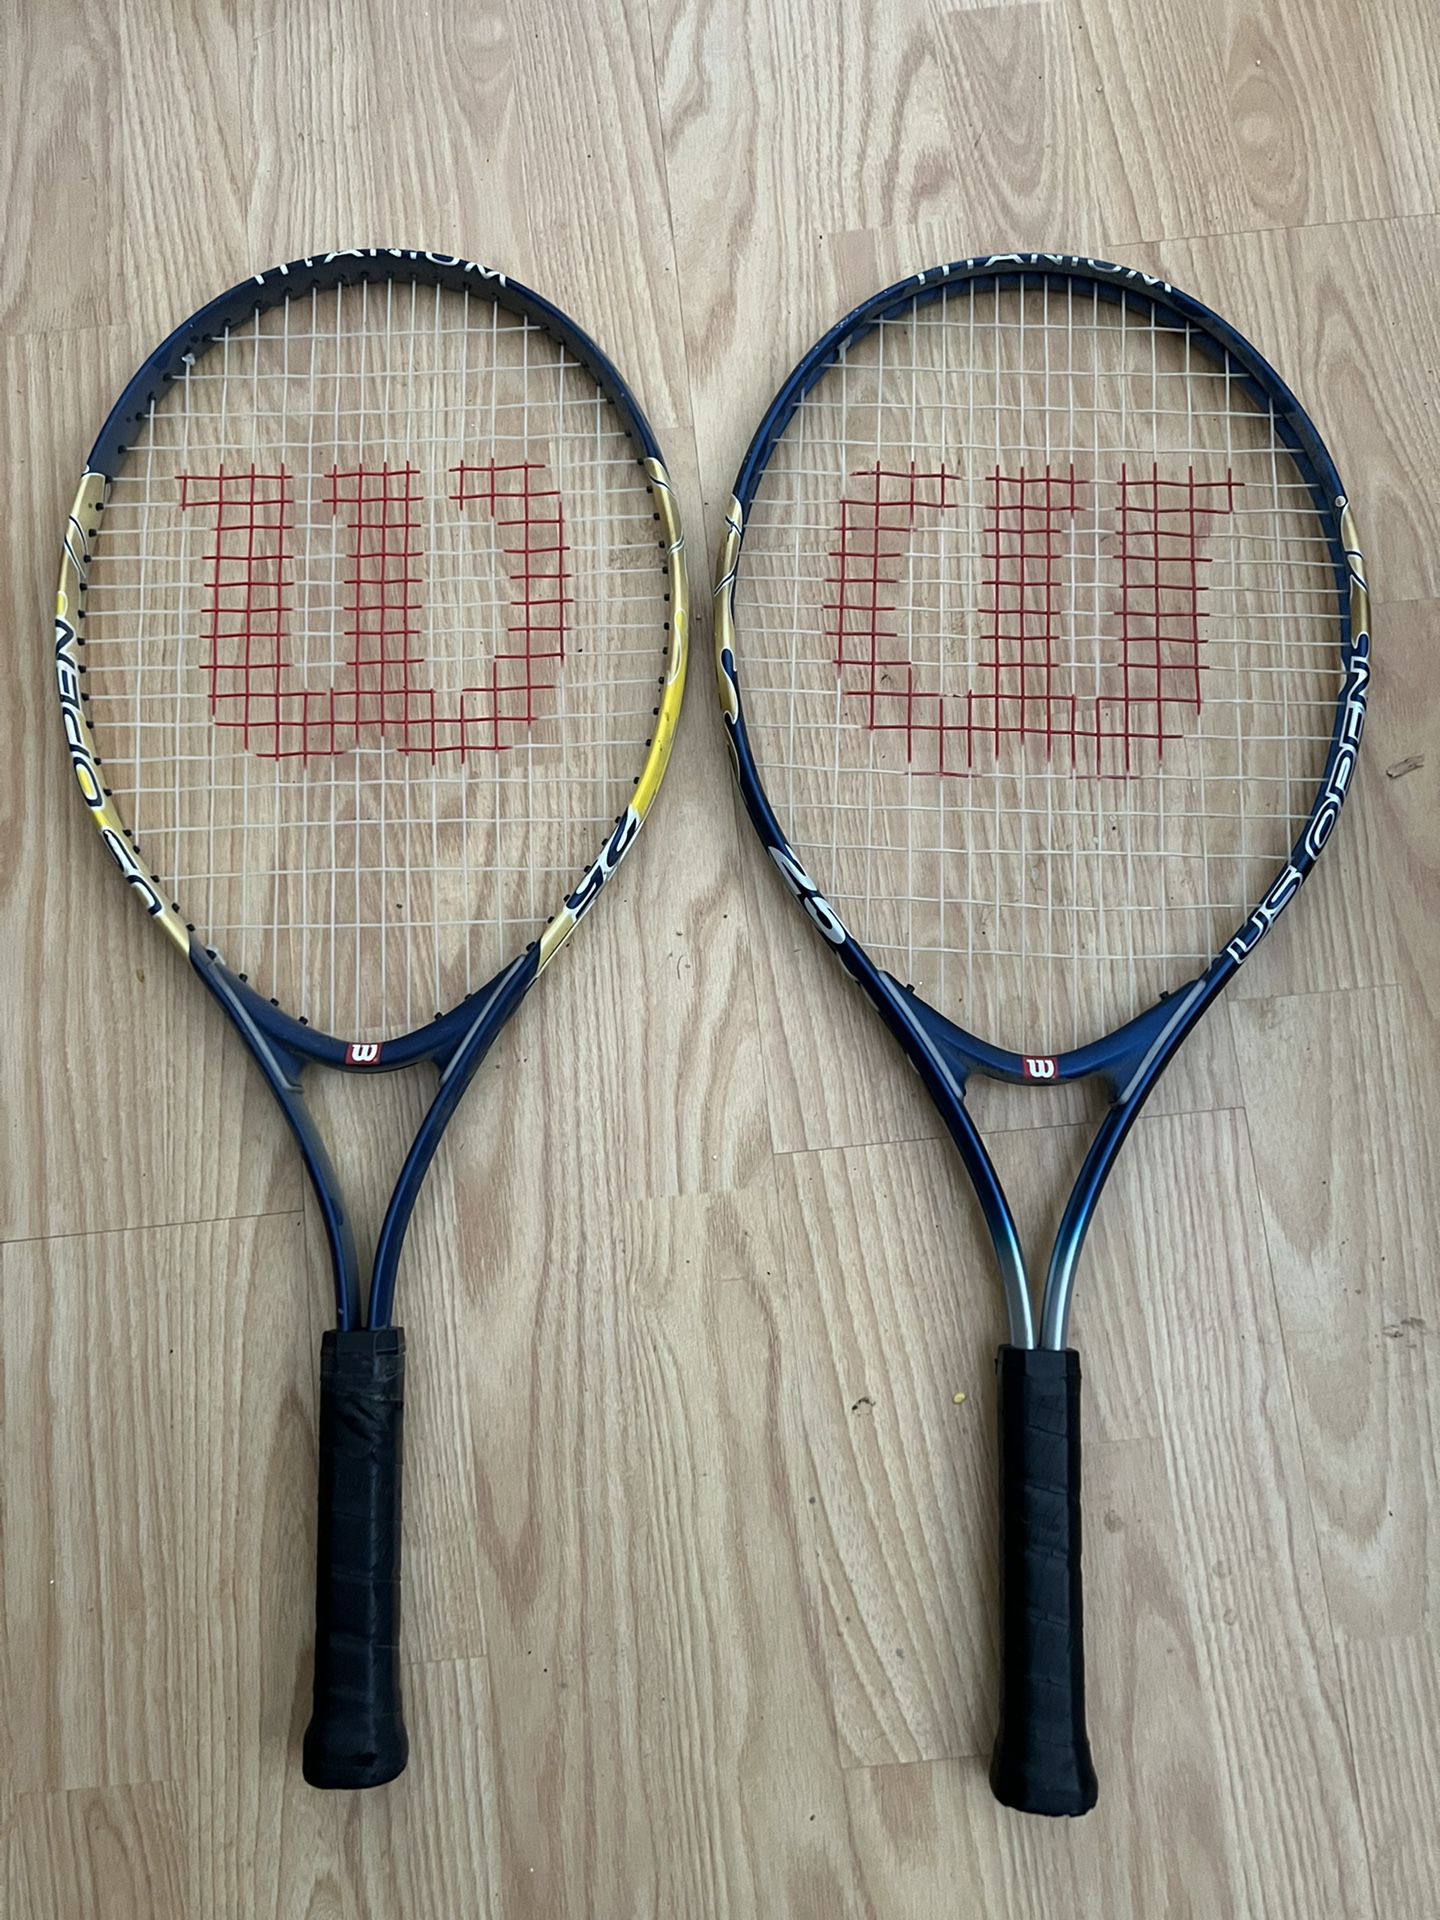 2 Racket Ball Rackets